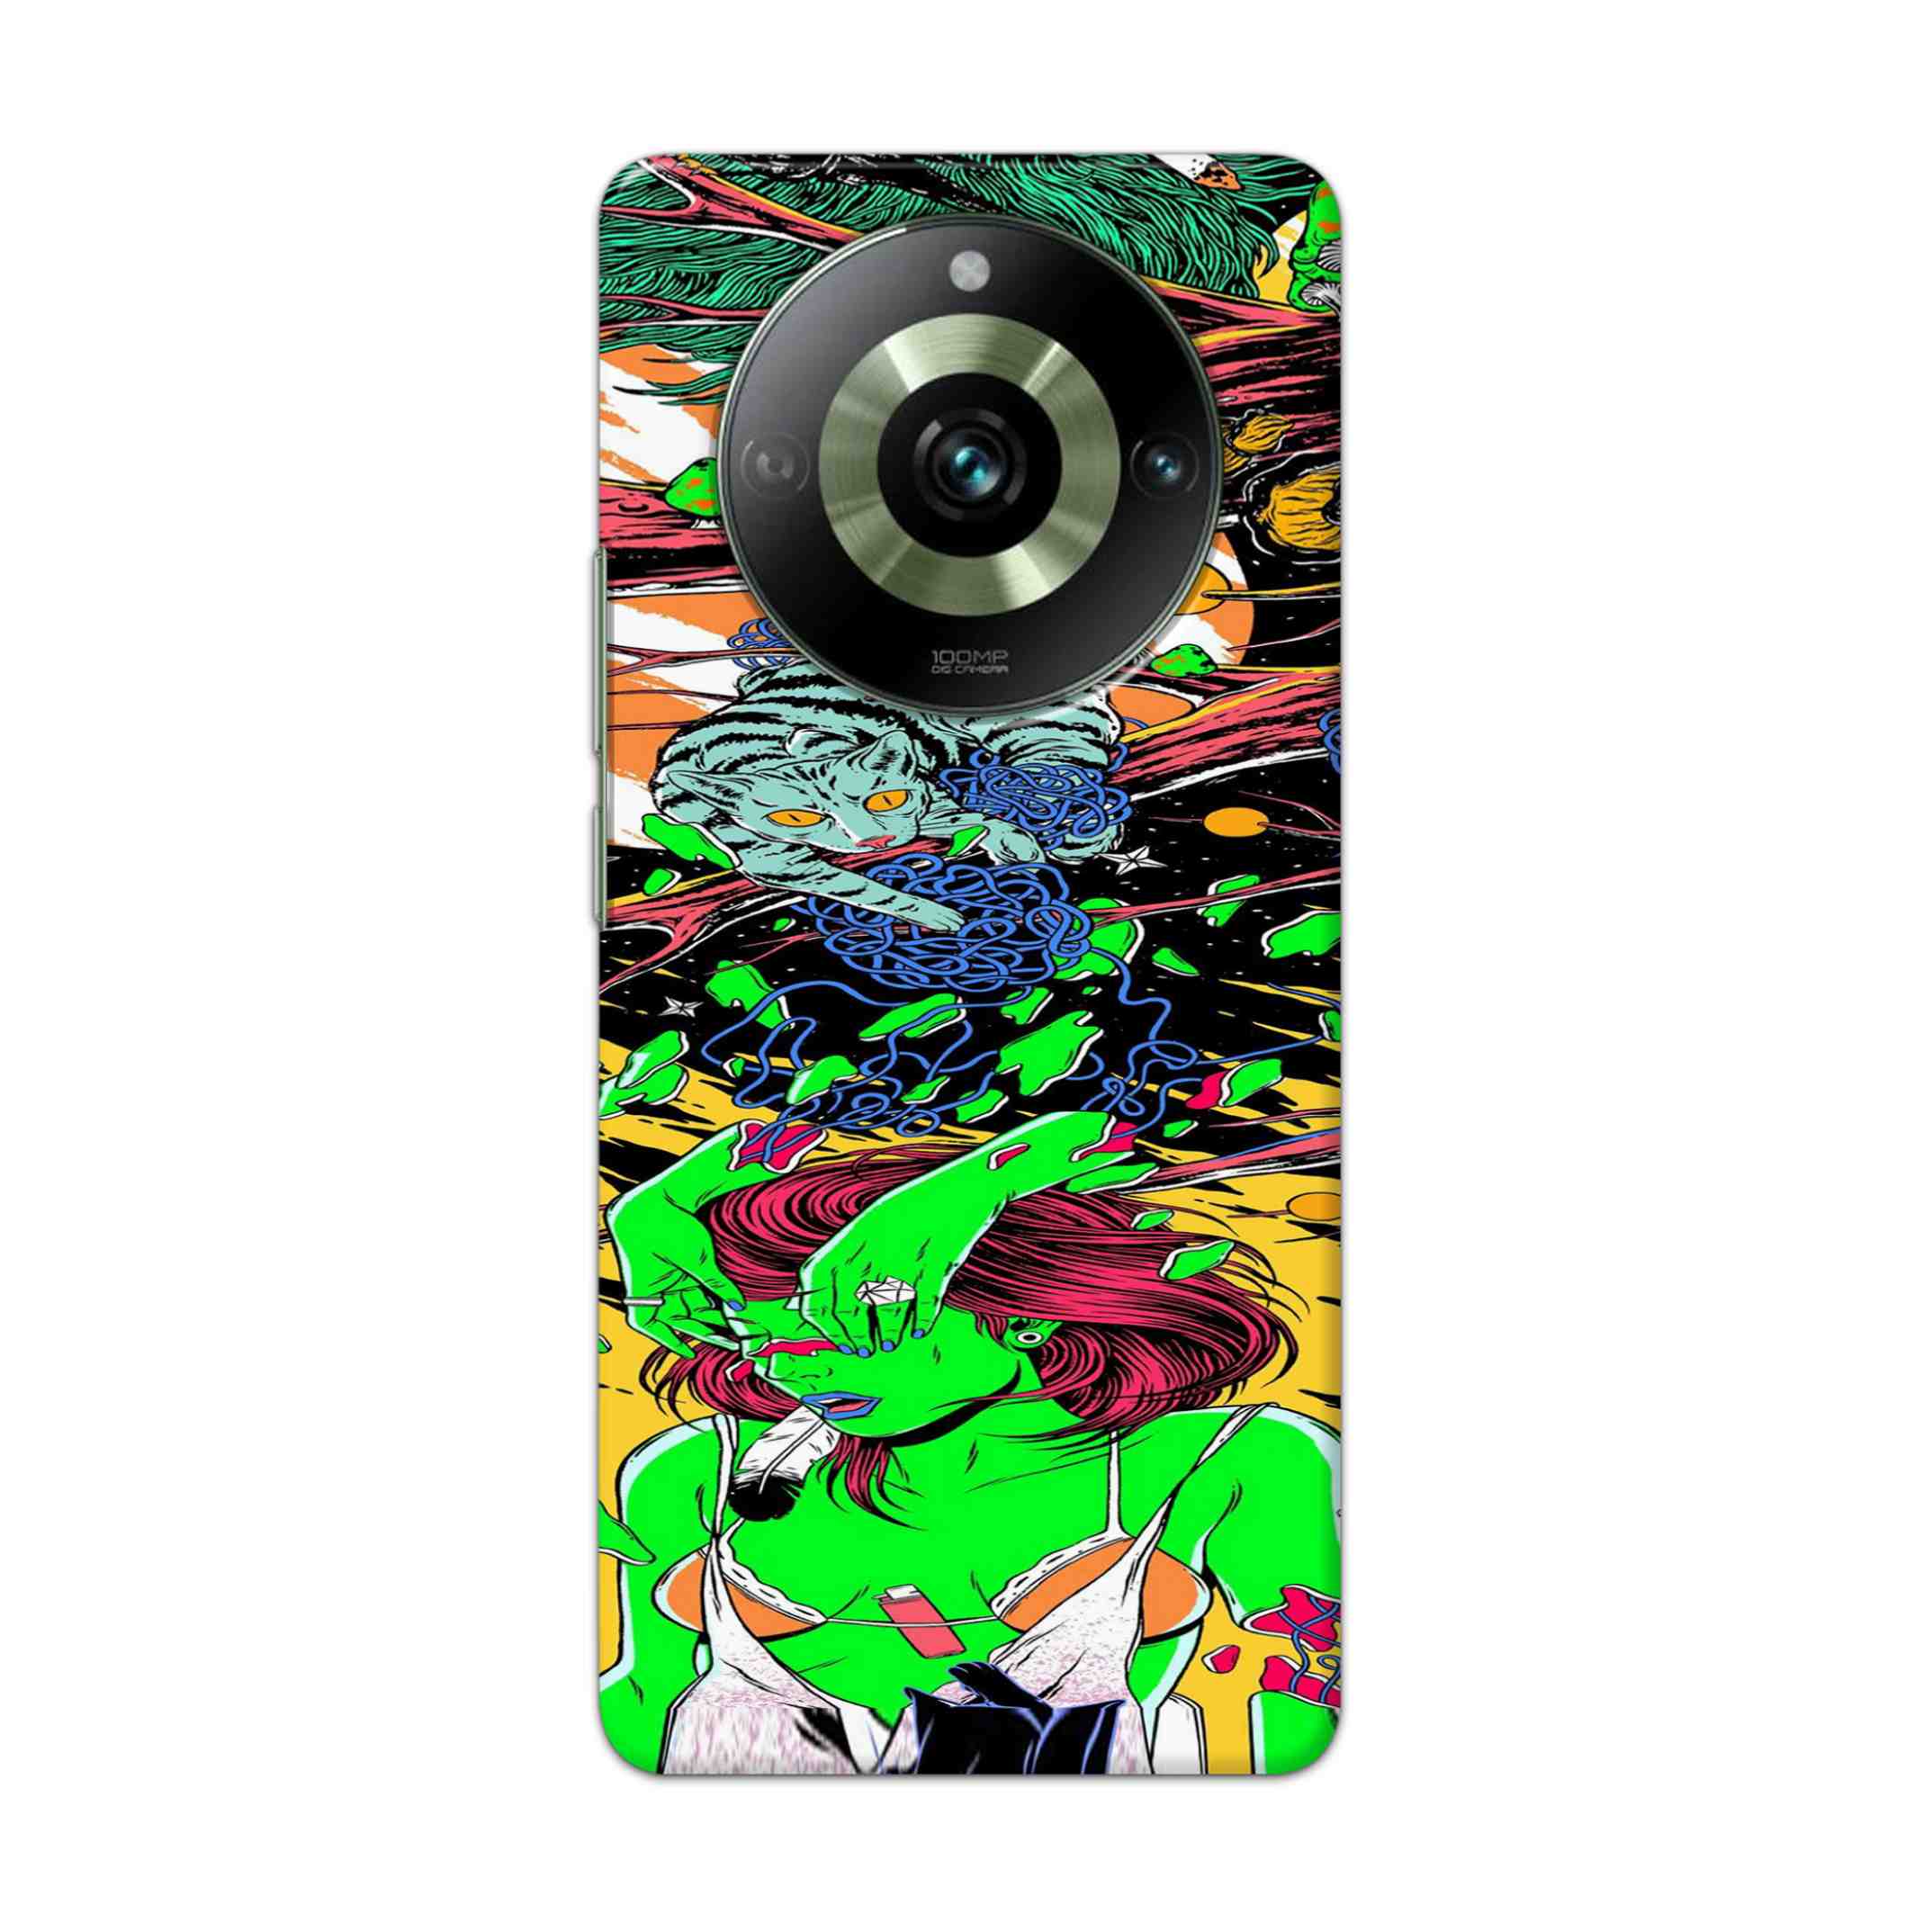 Buy Green Girl Art Hard Back Mobile Phone Case Cover For Realme11 pro5g Online